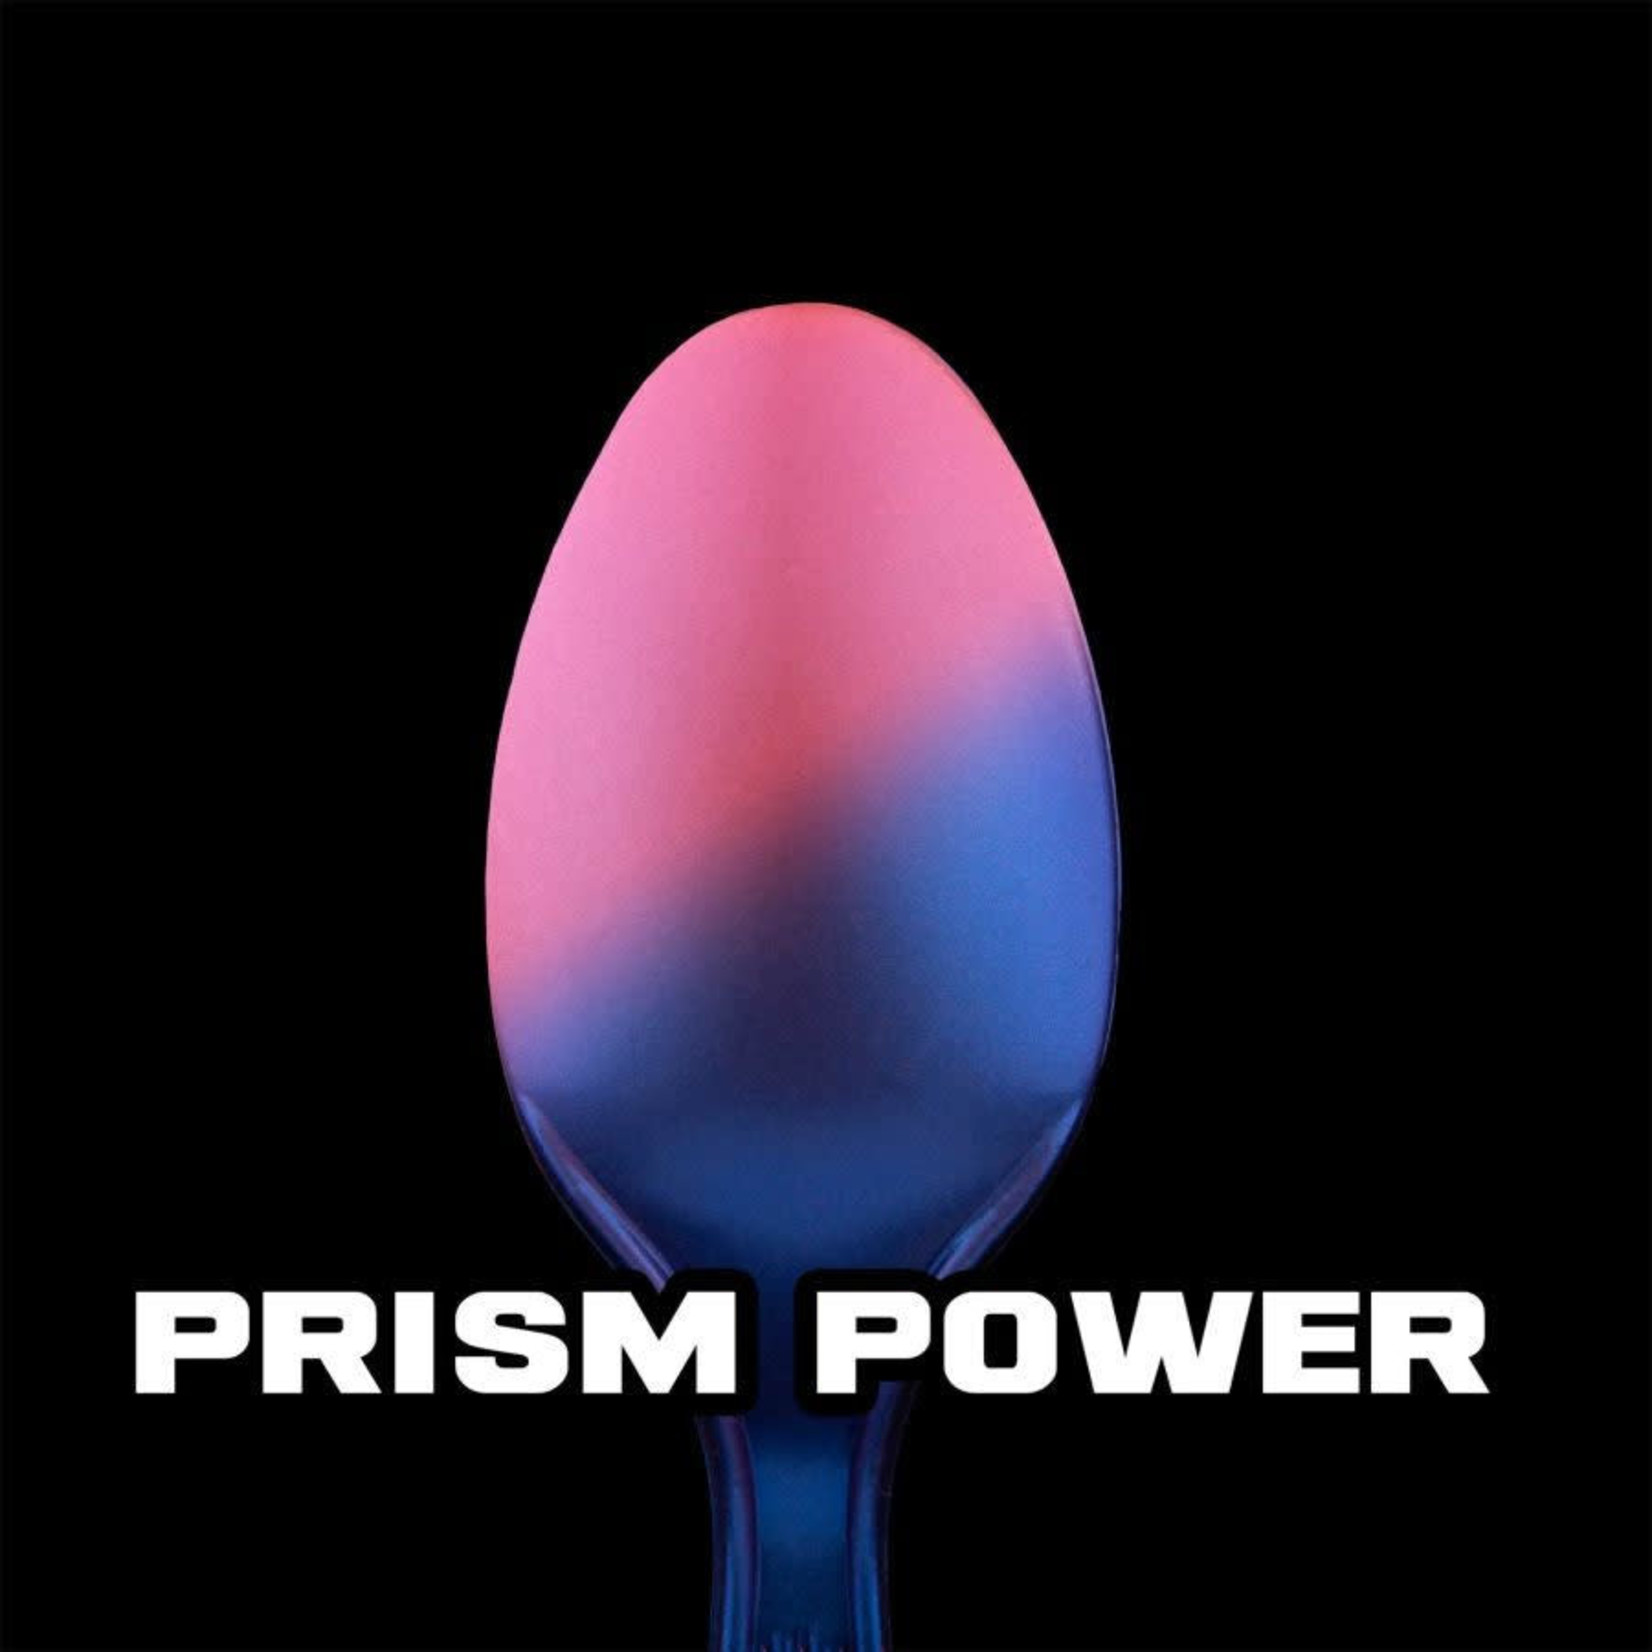 Turbo Dork - Turboshift - Prism Power